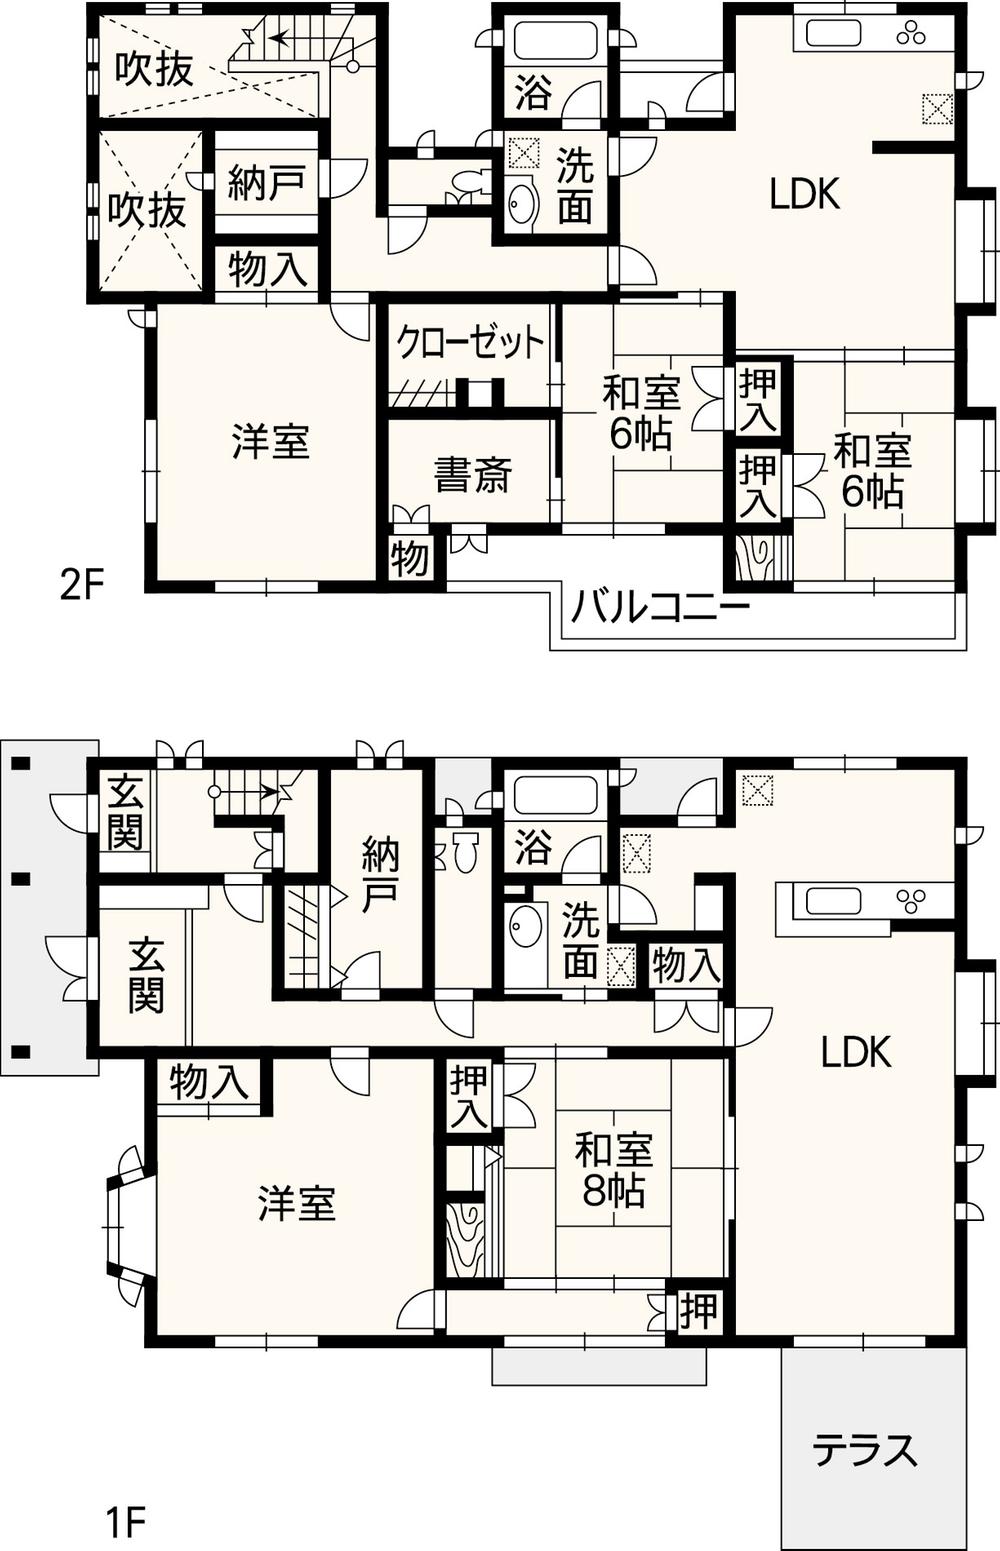 Floor plan. 29,800,000 yen, 5LLDDKK, Land area 259.6 sq m , Building area 213.43 sq m